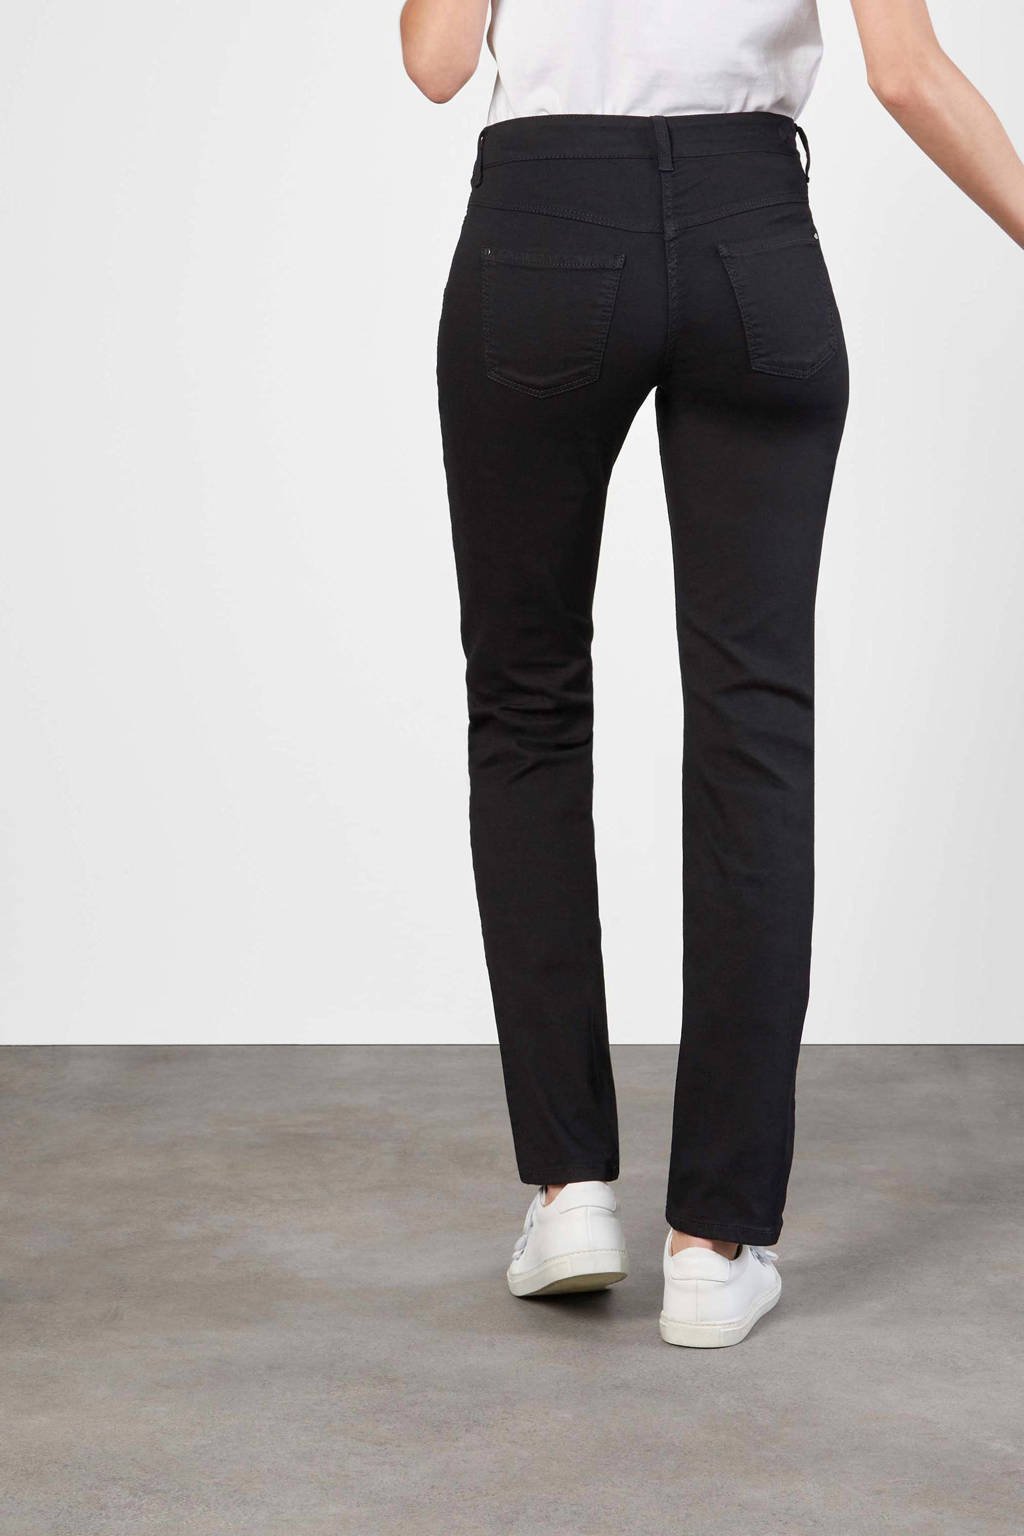 knal Samenstelling kleinhandel MAC Dream straight fit jeans zwart | wehkamp